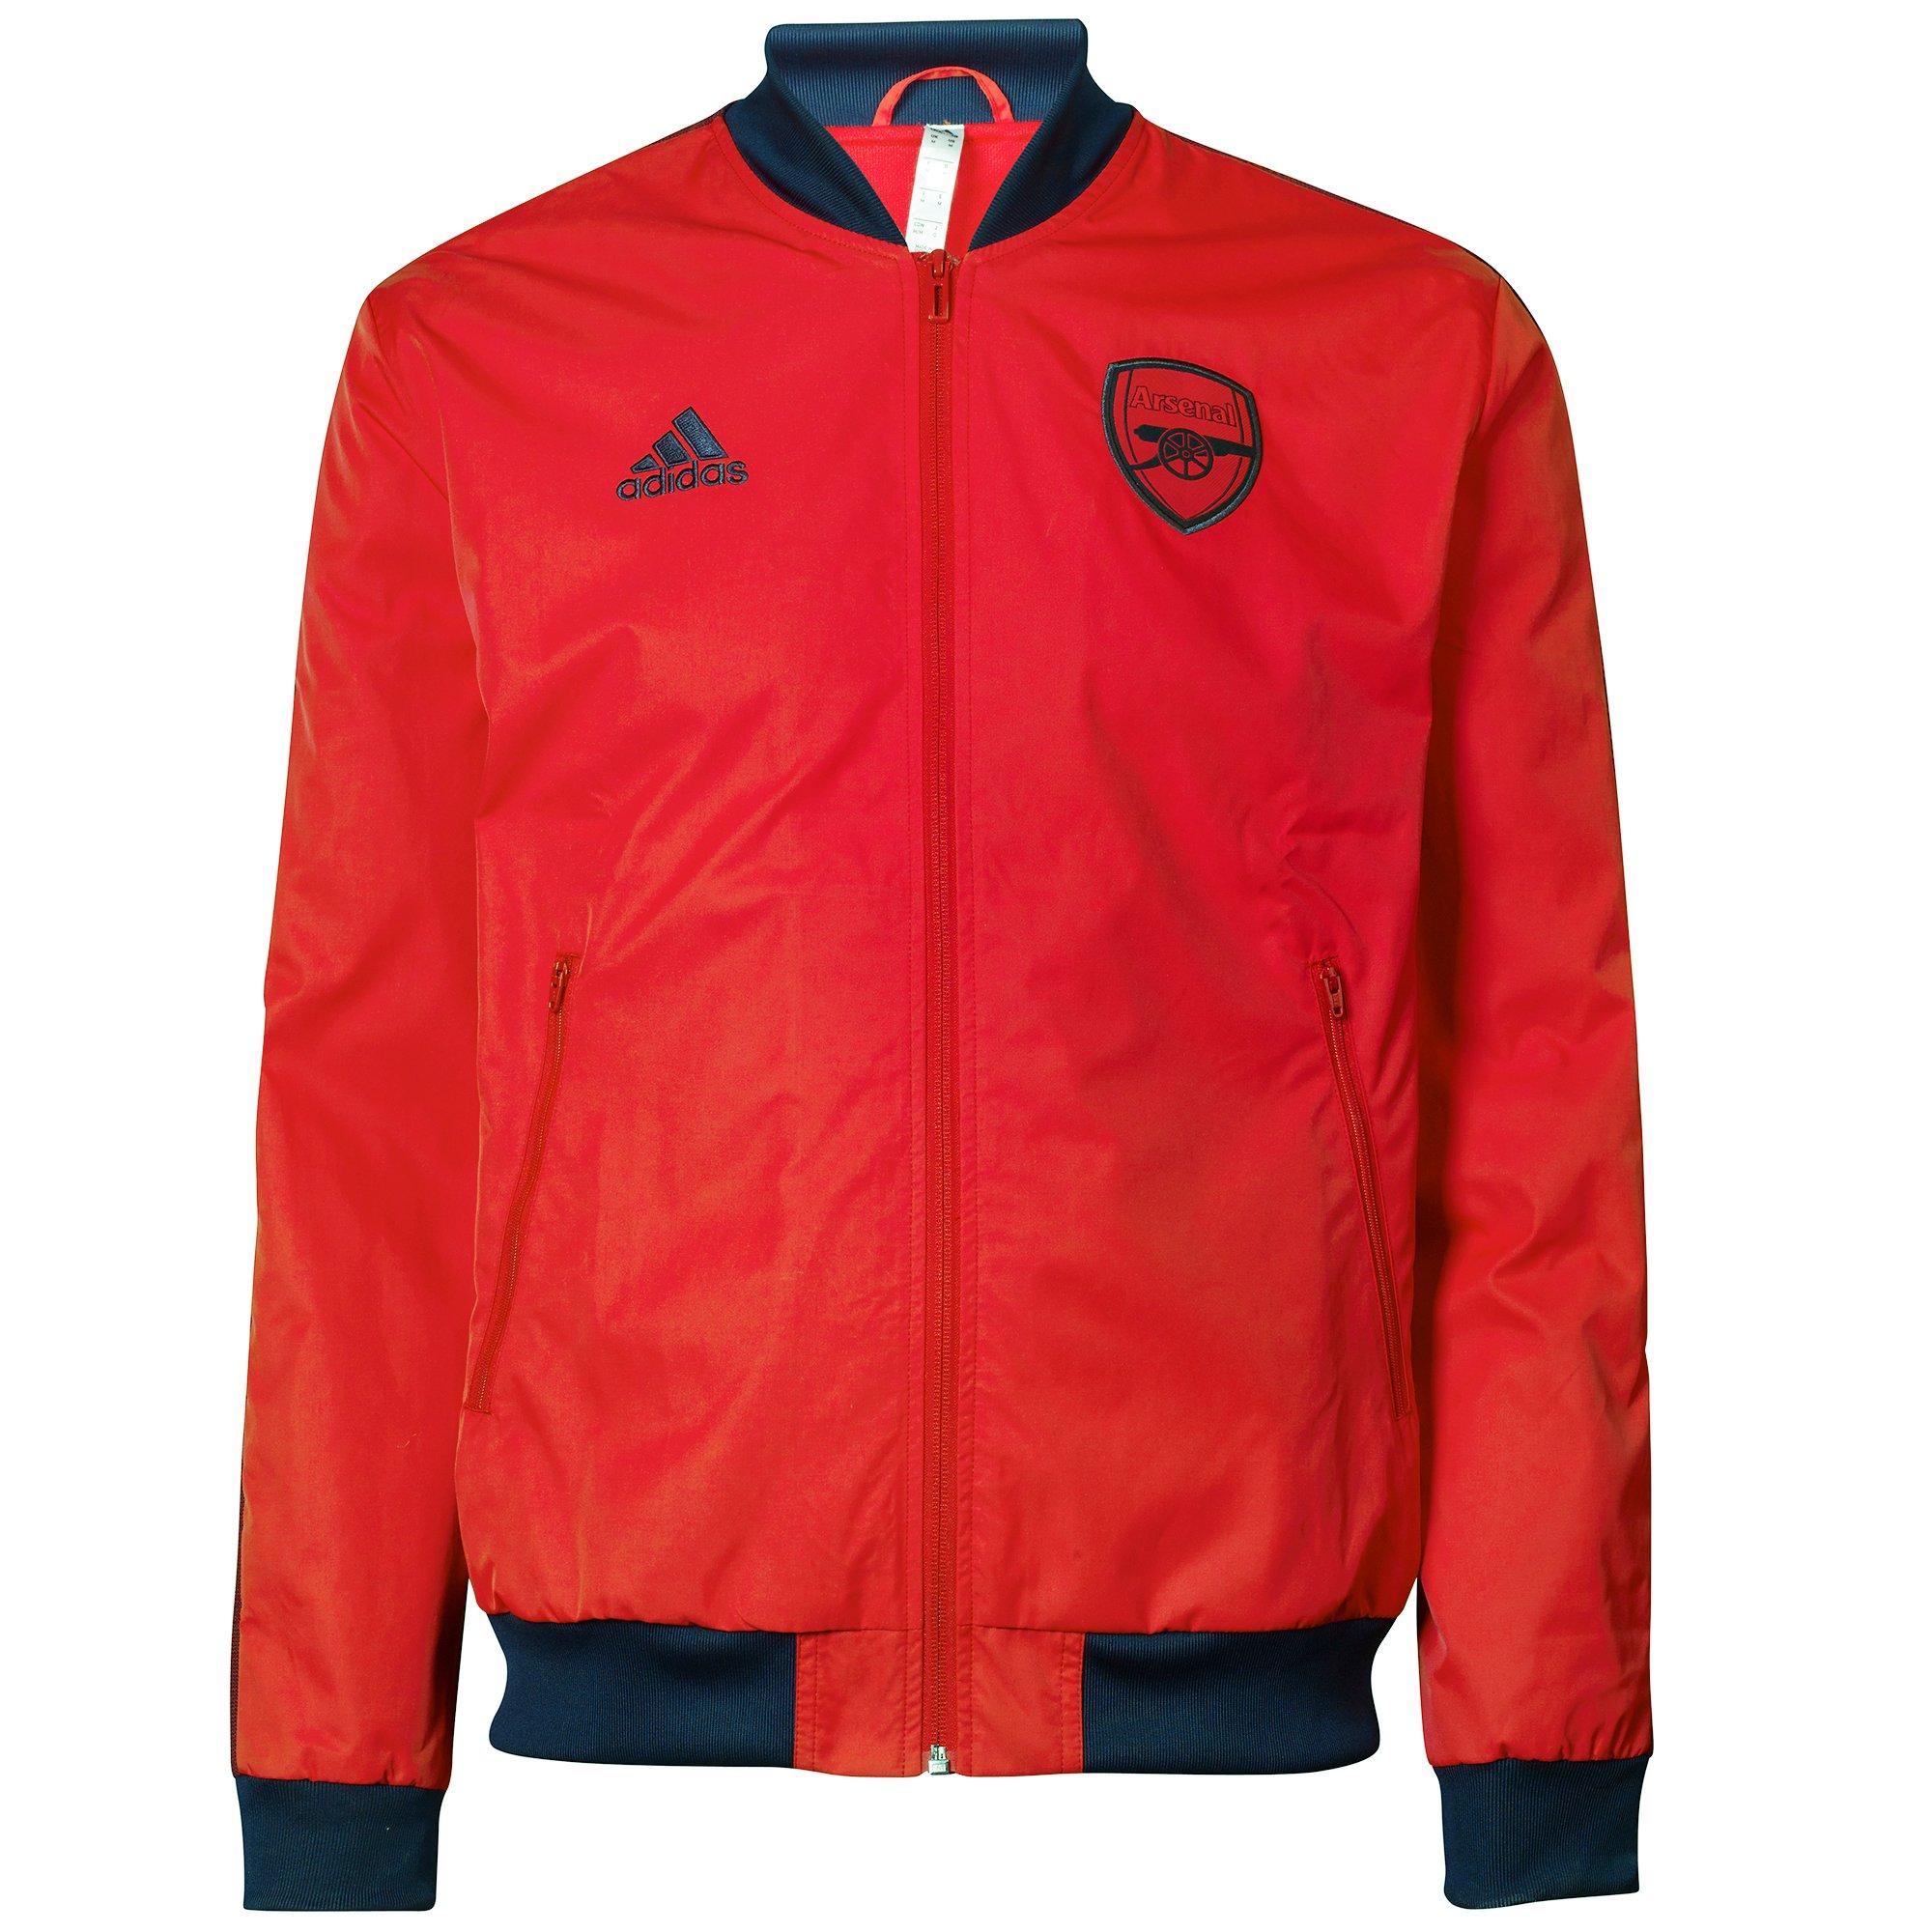 Arsenal SS20 Anthem Jacket